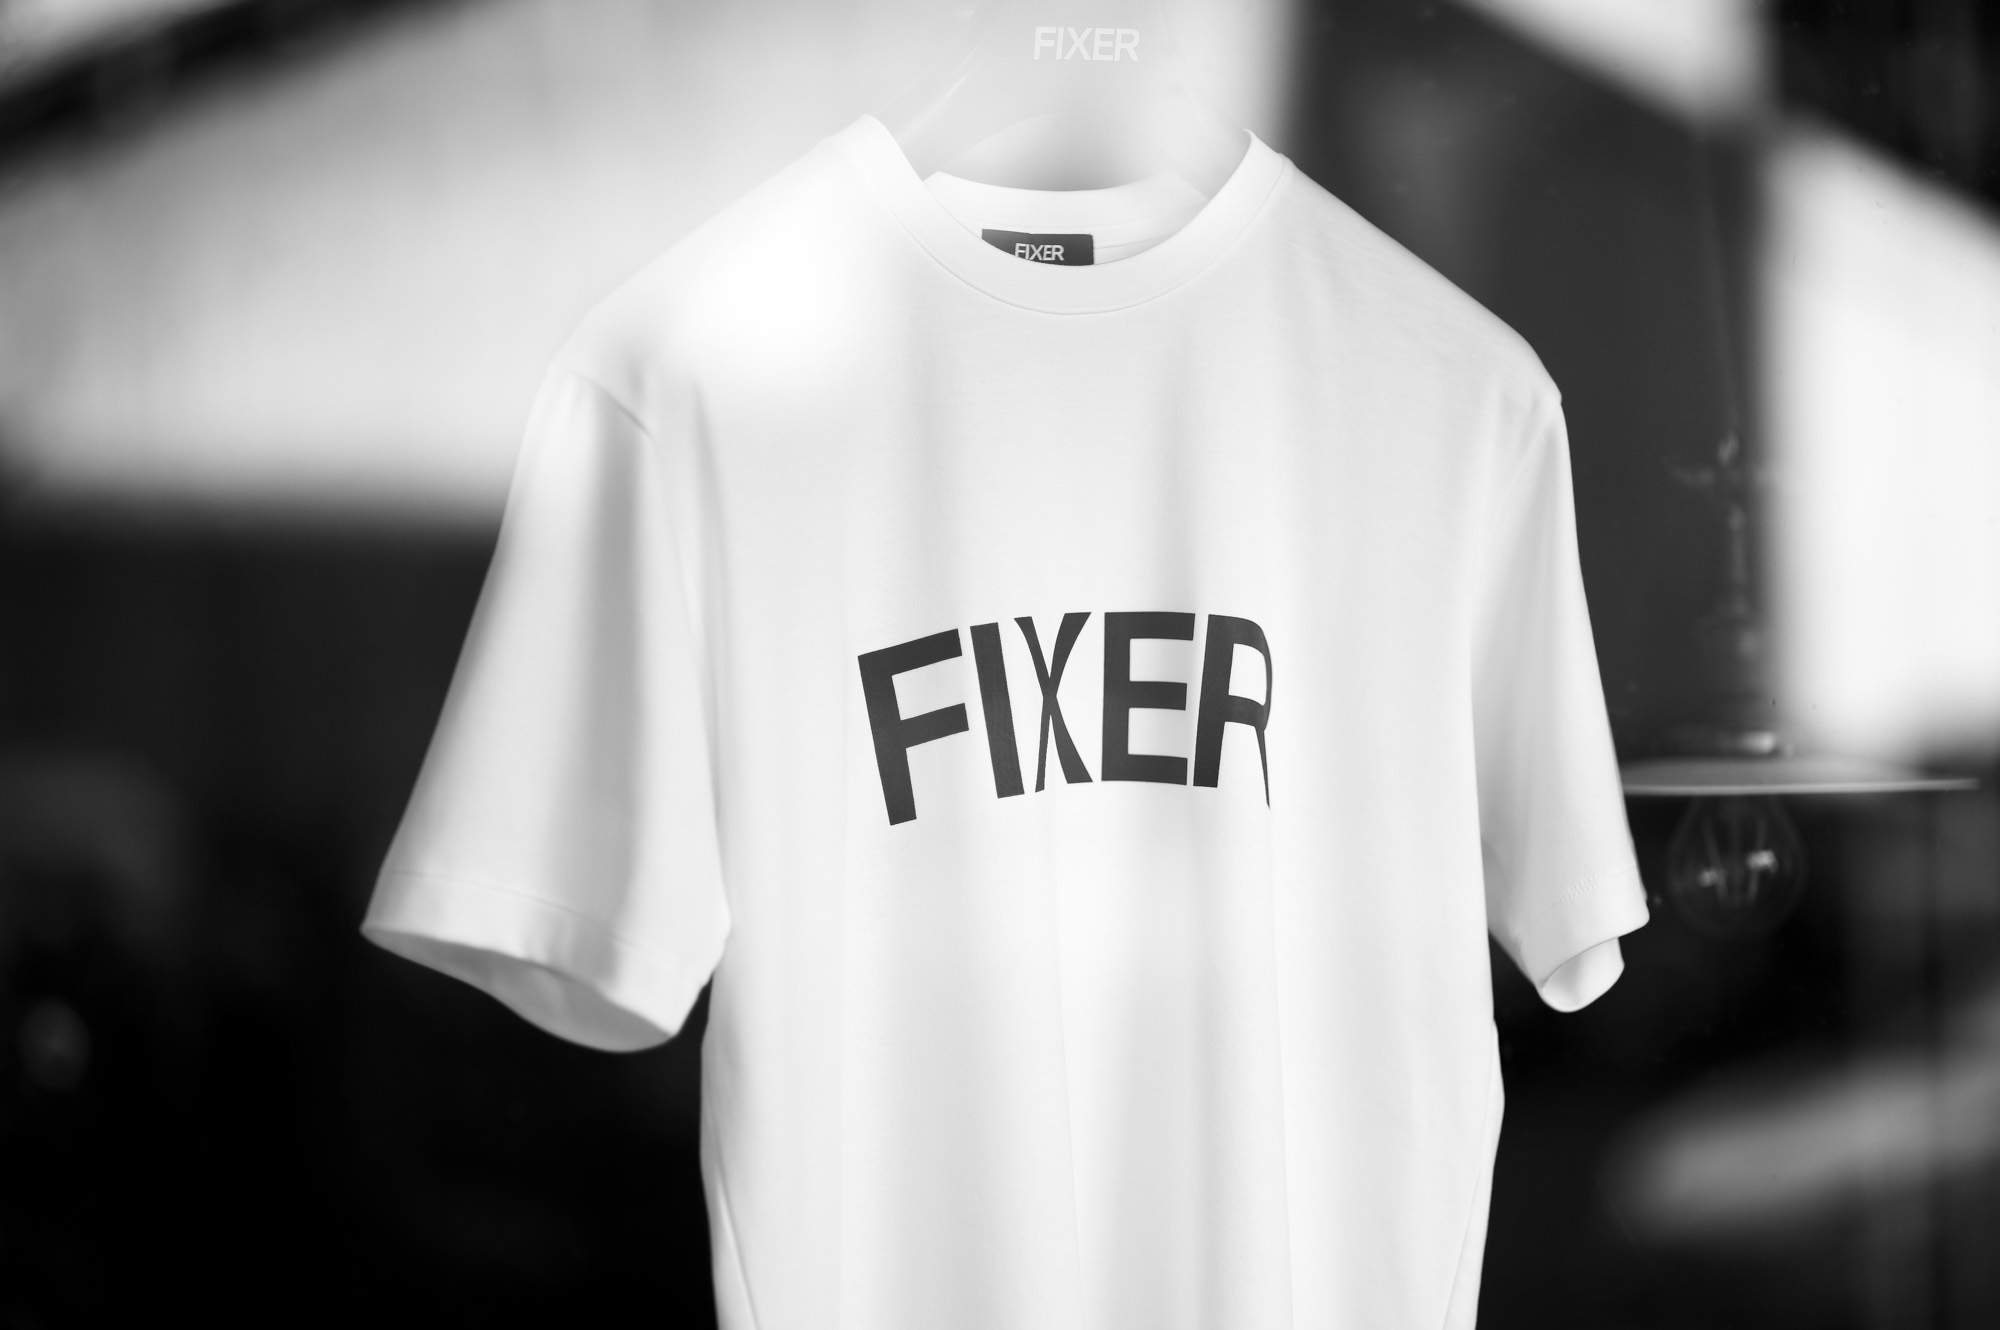 FIXER "FTS-02" Print Crew Neck T-shirt WHITE フィクサー プリントクルーネックTシャツ ホワイト 愛知 名古屋 Alto e Diritto altoediritto アルトエデリット